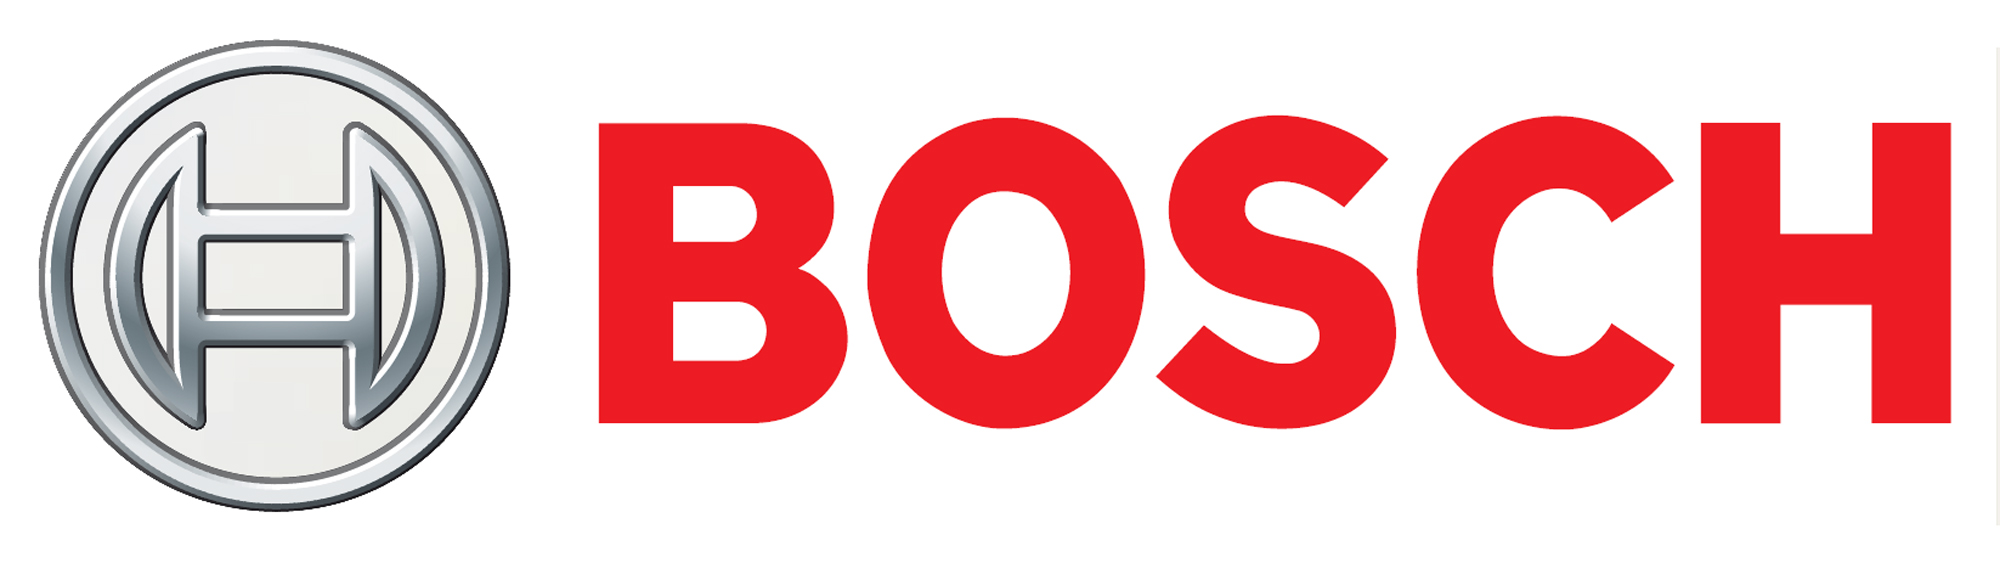 LC AUTOMOBILES 49 - logo Bosch